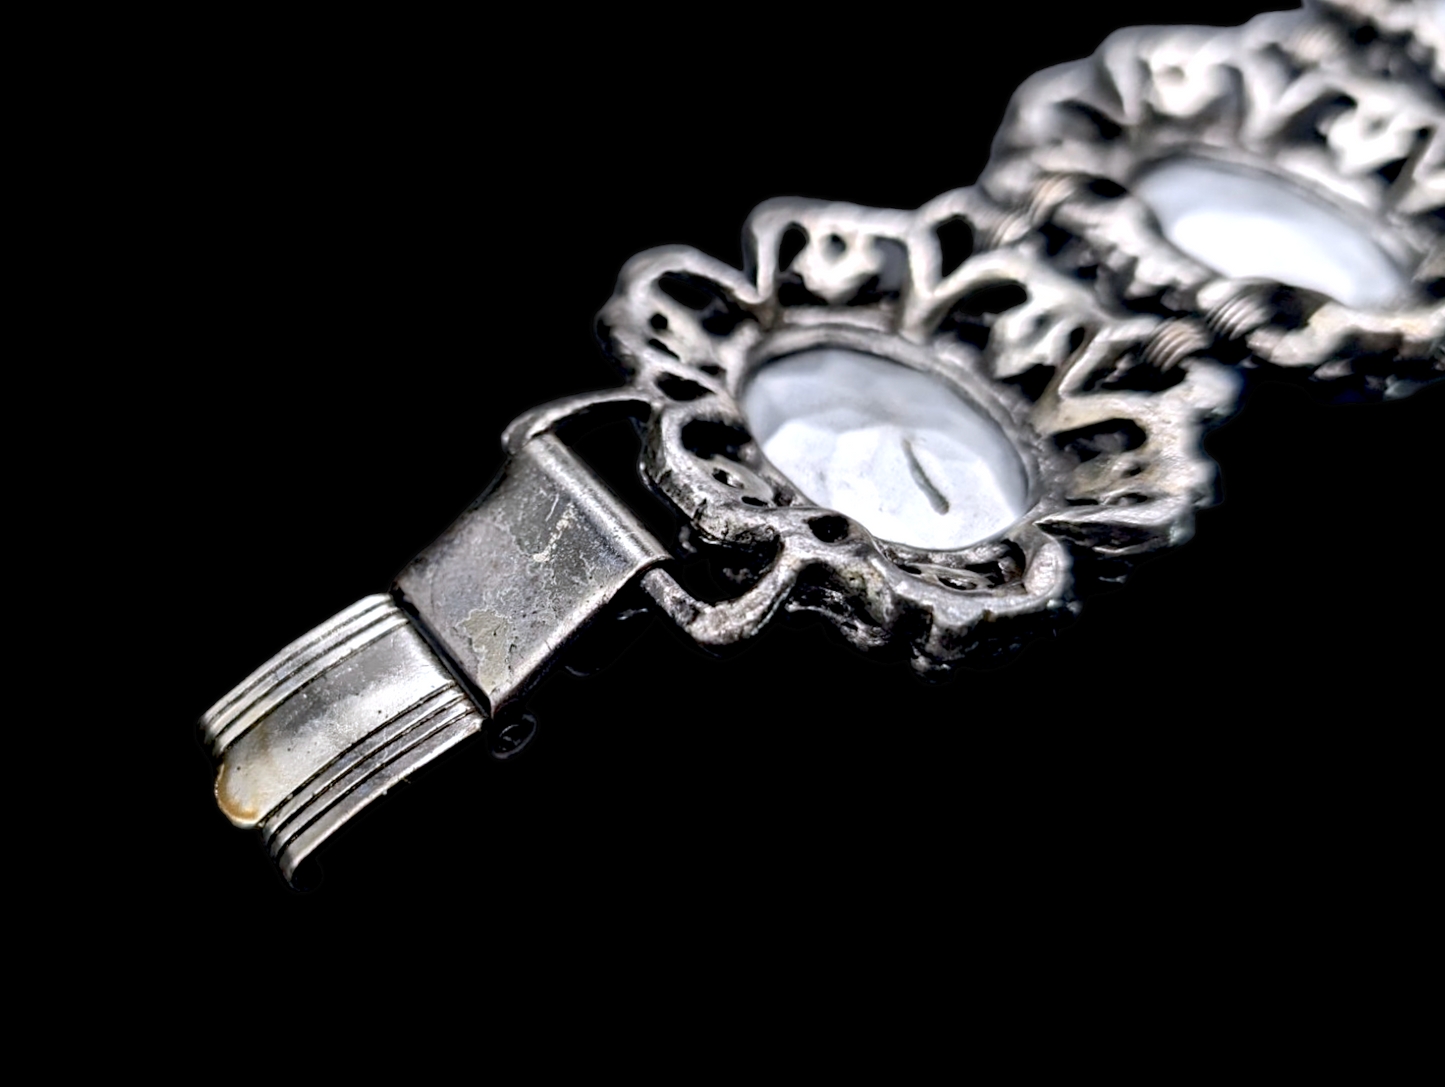 Vintage Rare Elizabeth Morrey Gothic Inspired Silver Filigree Earrings and Bracelet 2 Piece Set